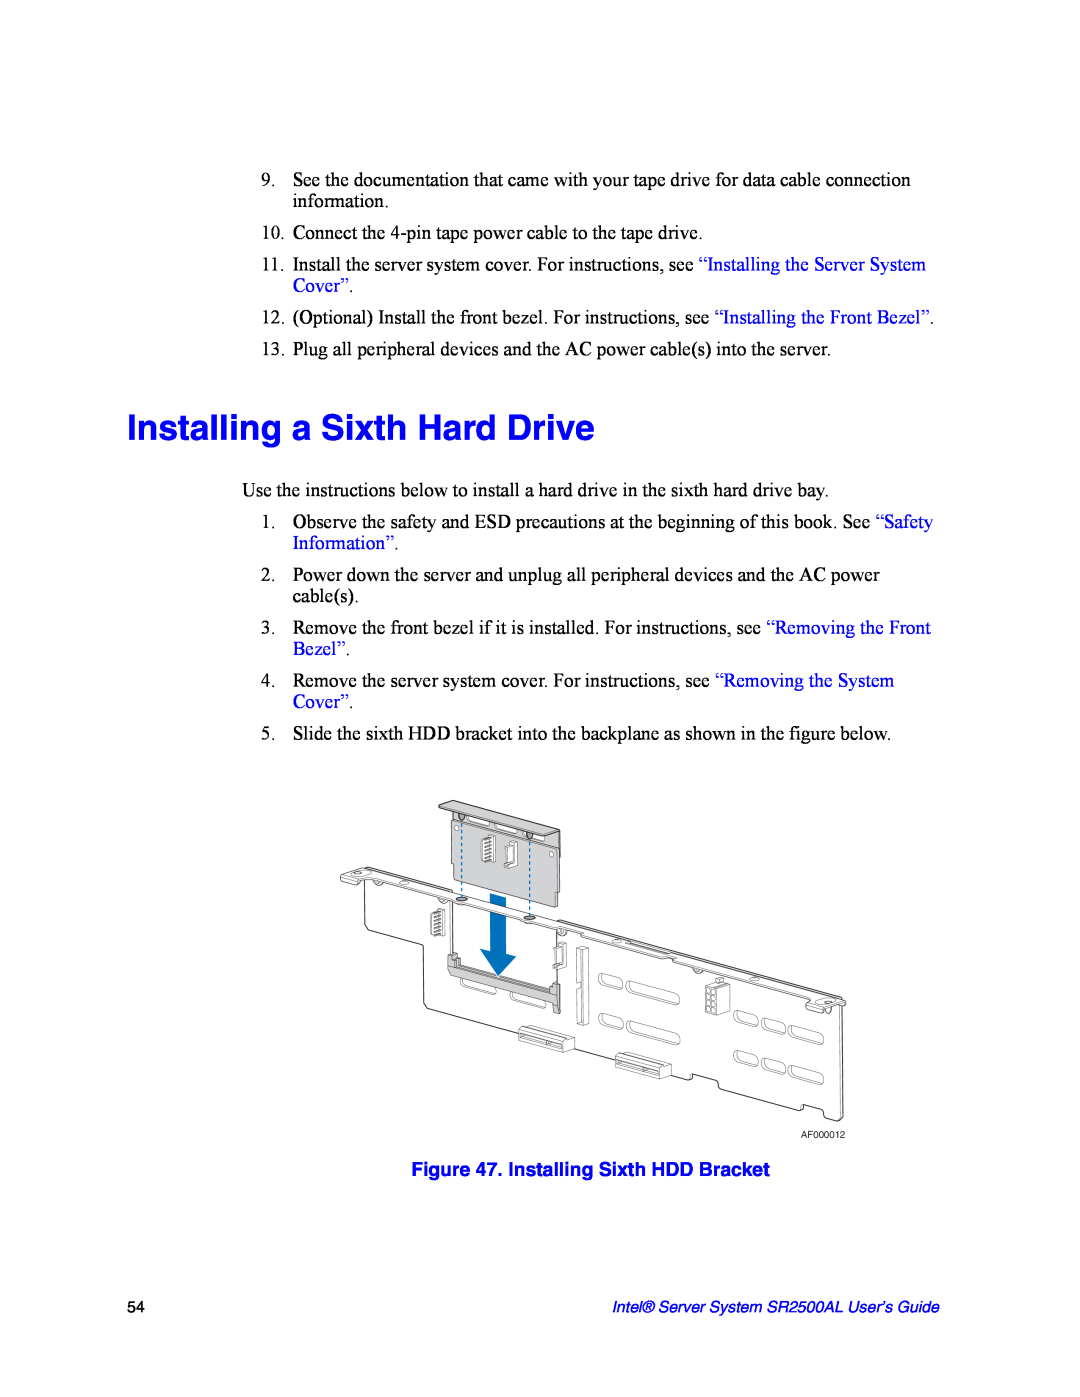 Intel SR2500AL manual Installing a Sixth Hard Drive, Installing Sixth HDD Bracket 